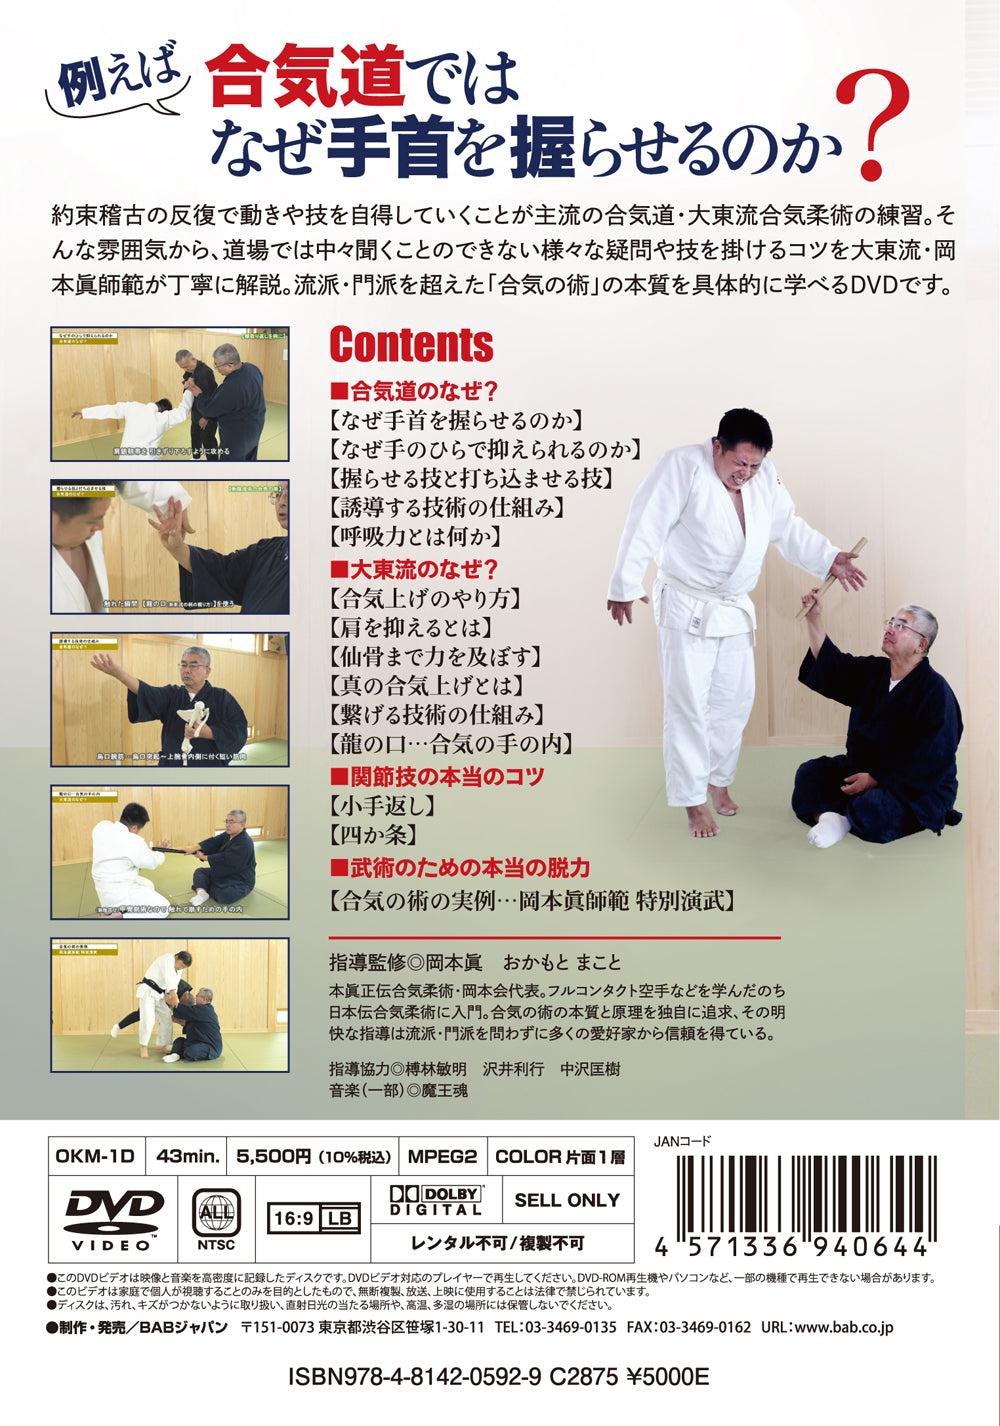 How to Apply Aiki Effectively DVD by Makoto Okamoto